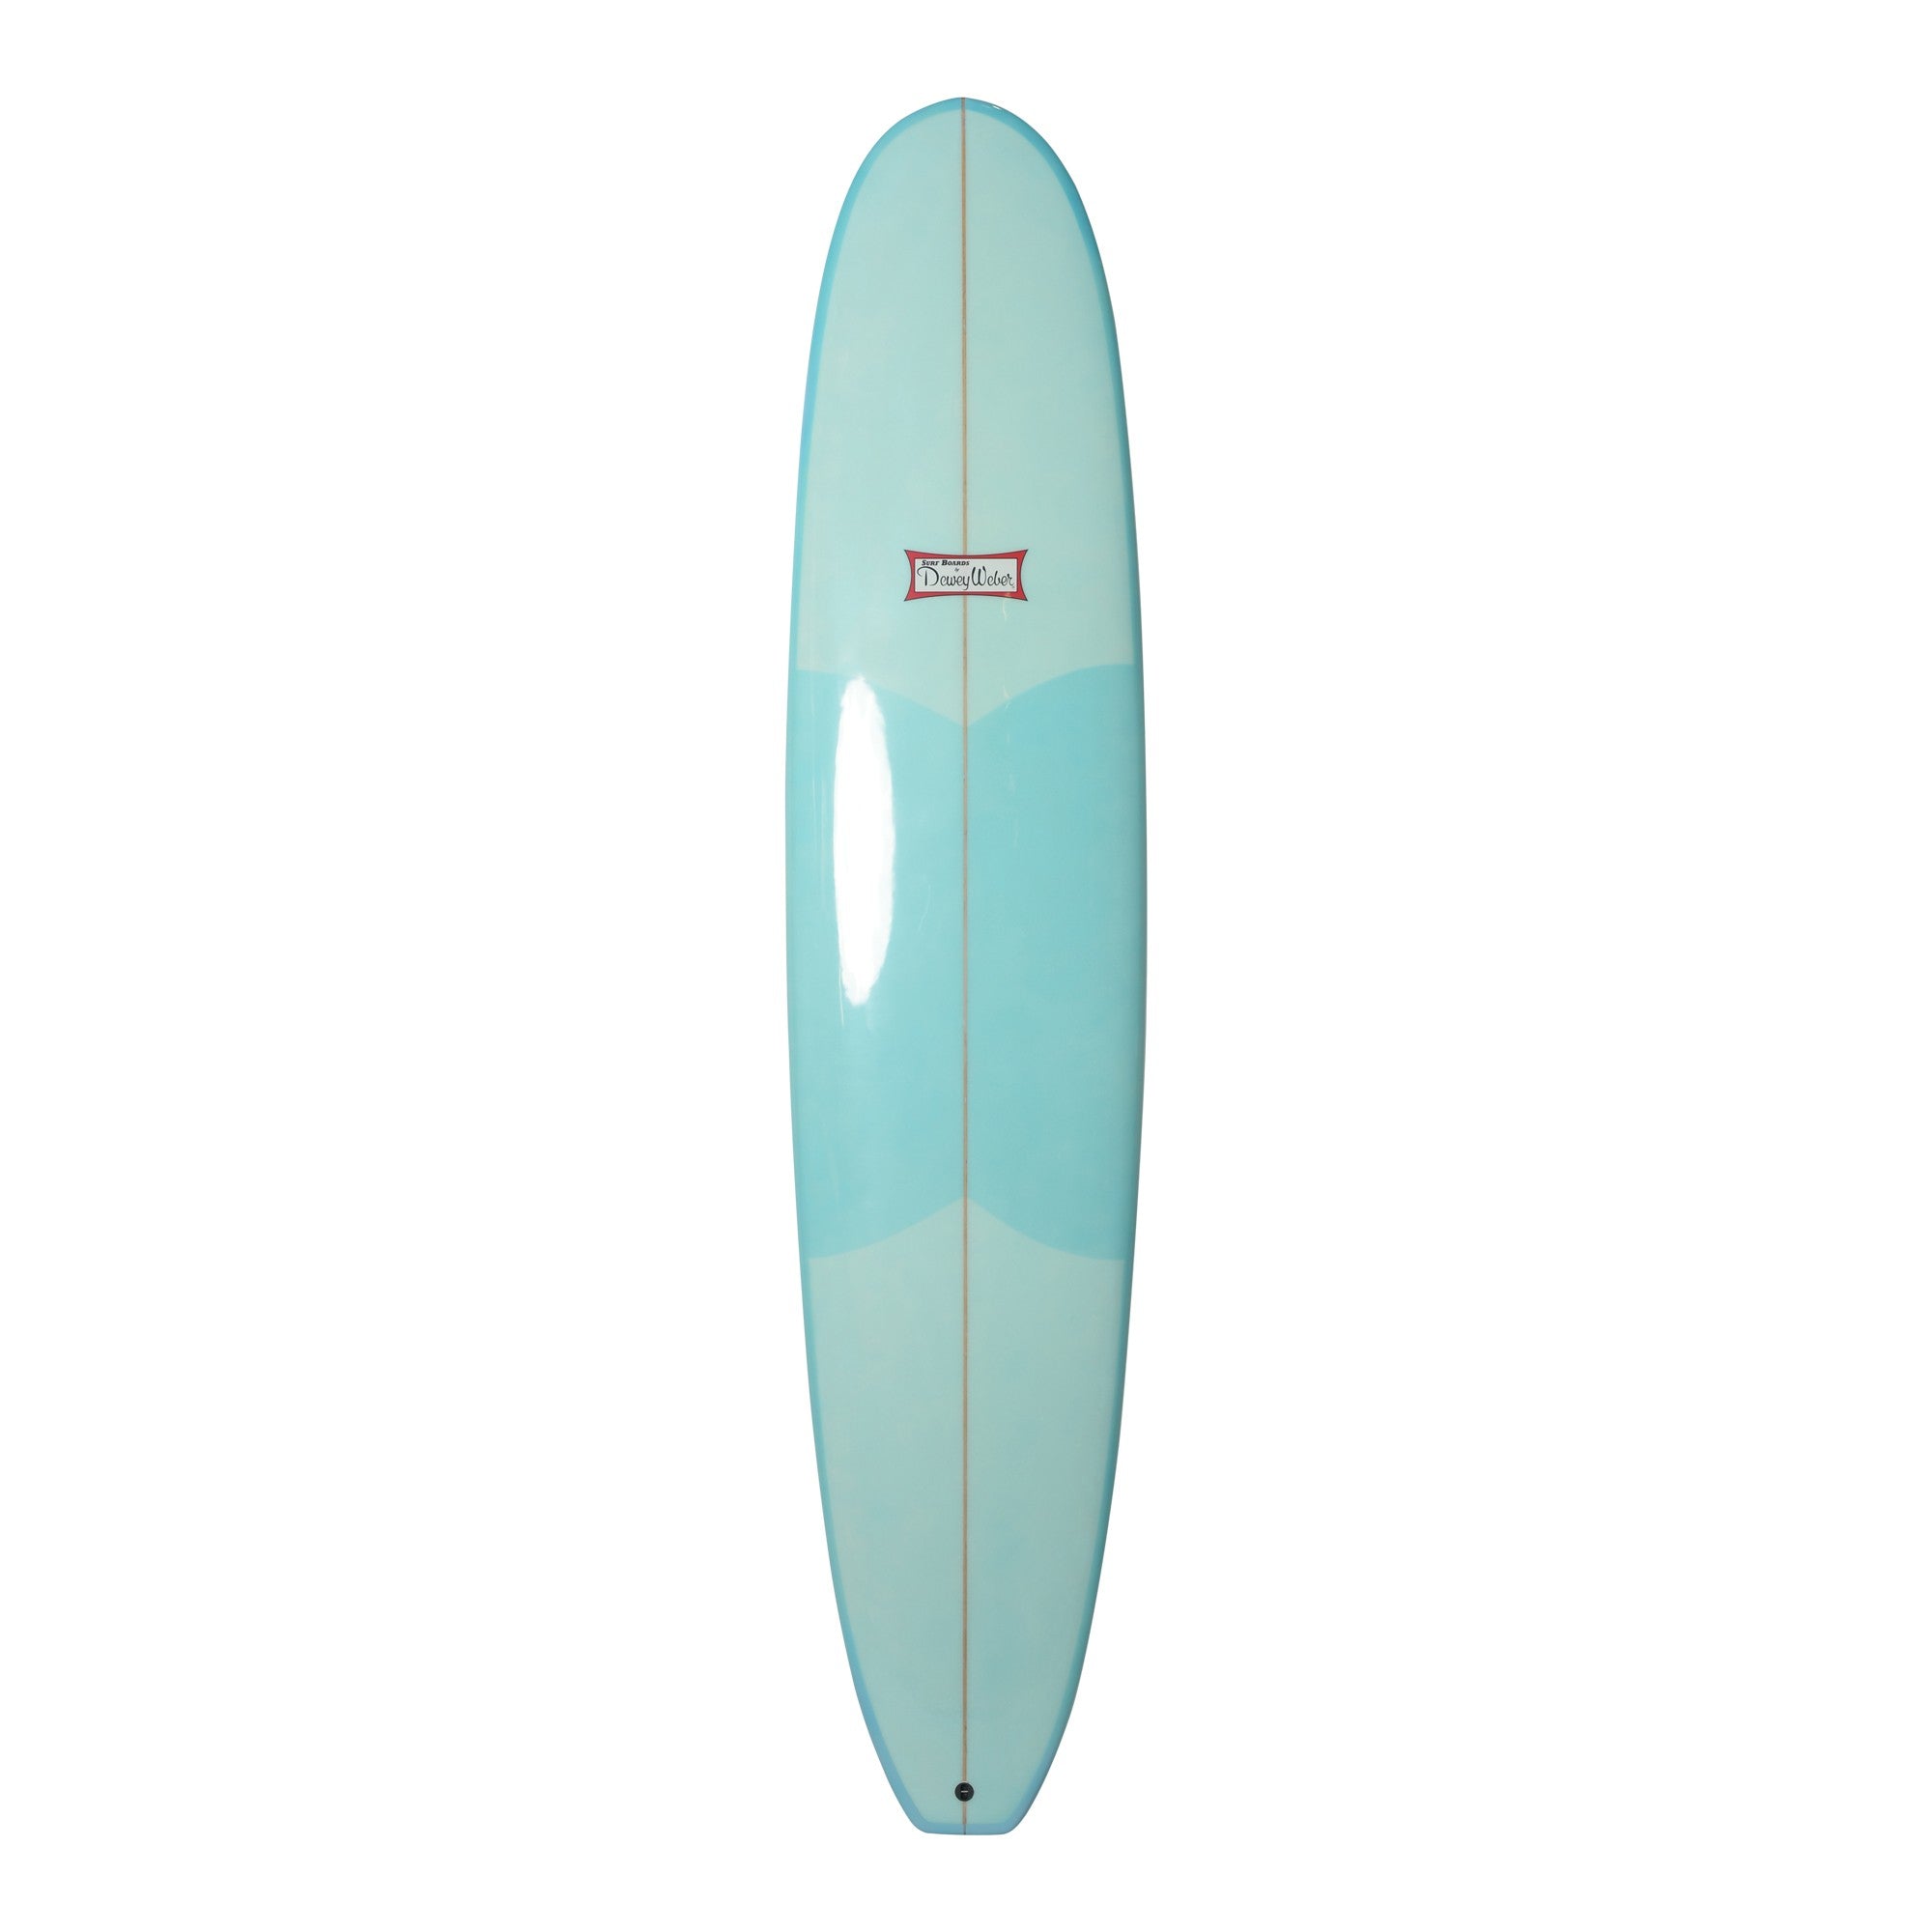 WEBER SURFBOARDS - Quantum 7'6 - Blue